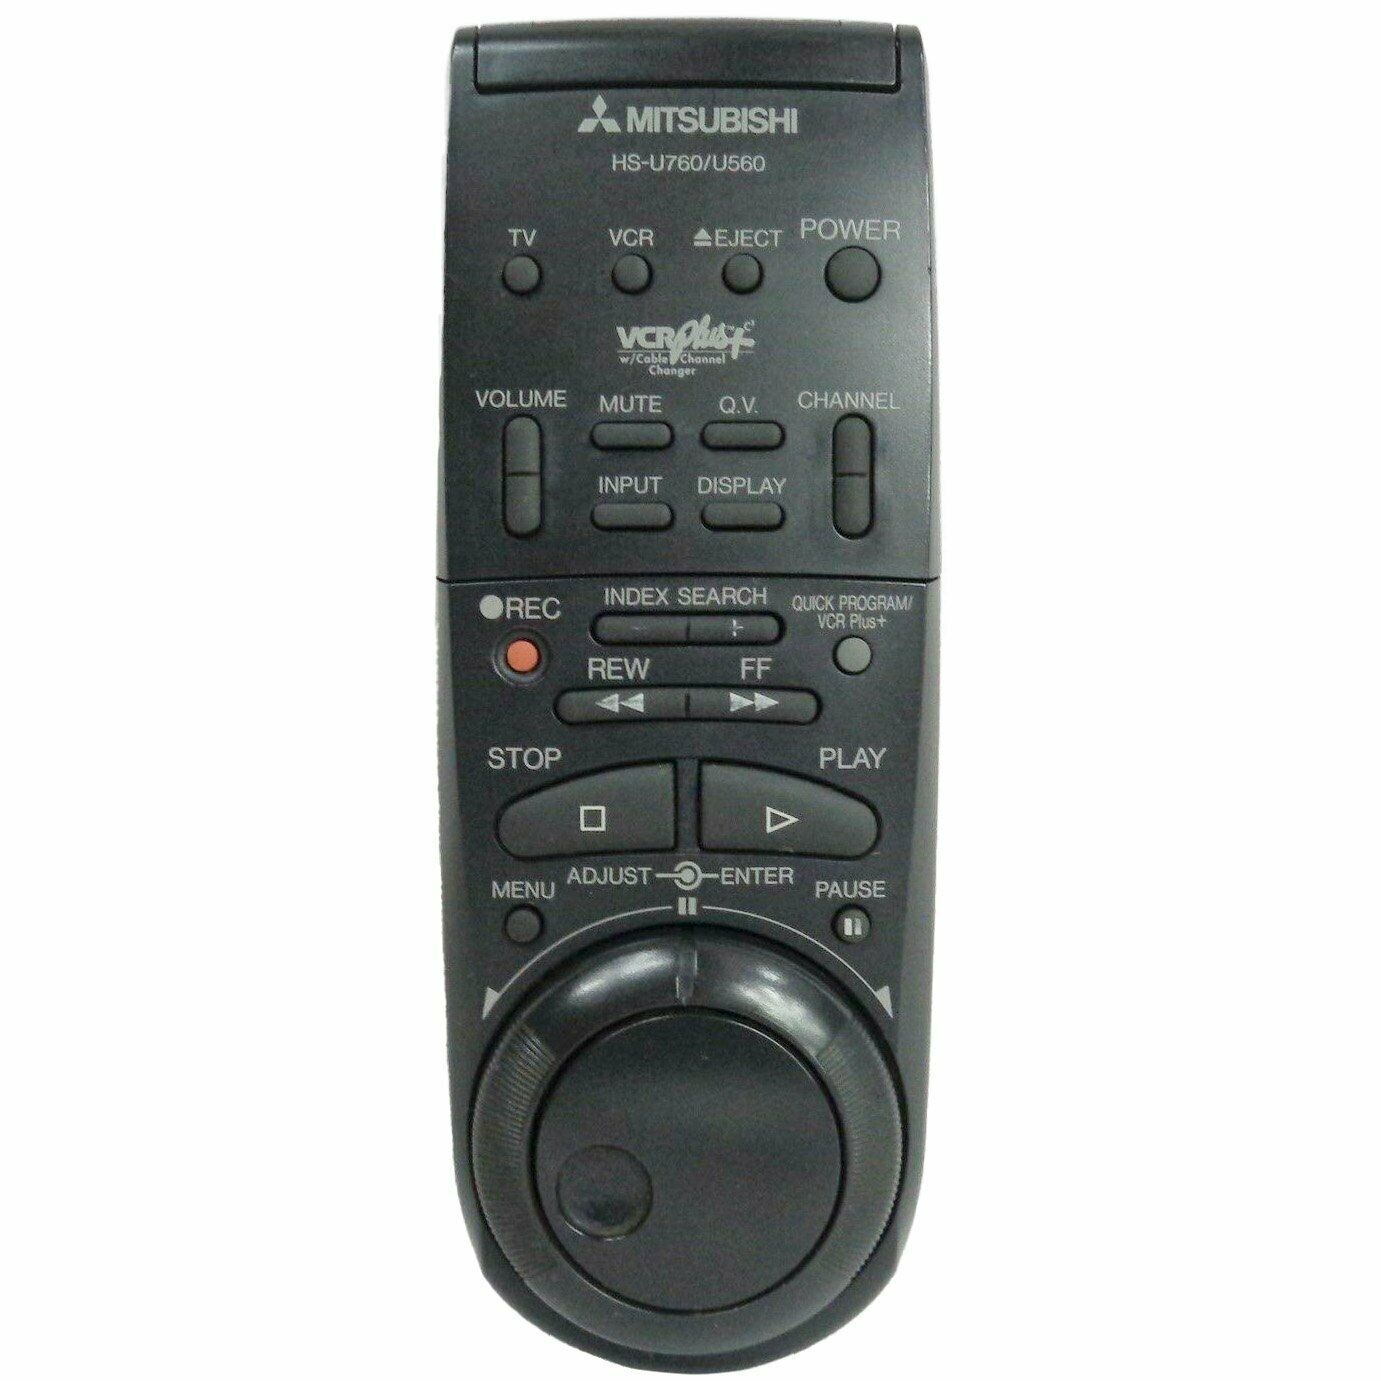 Primary image for Mitsubishi 939P591B1 Factory Original VCR Remote Control For HS-U760, HS-U560